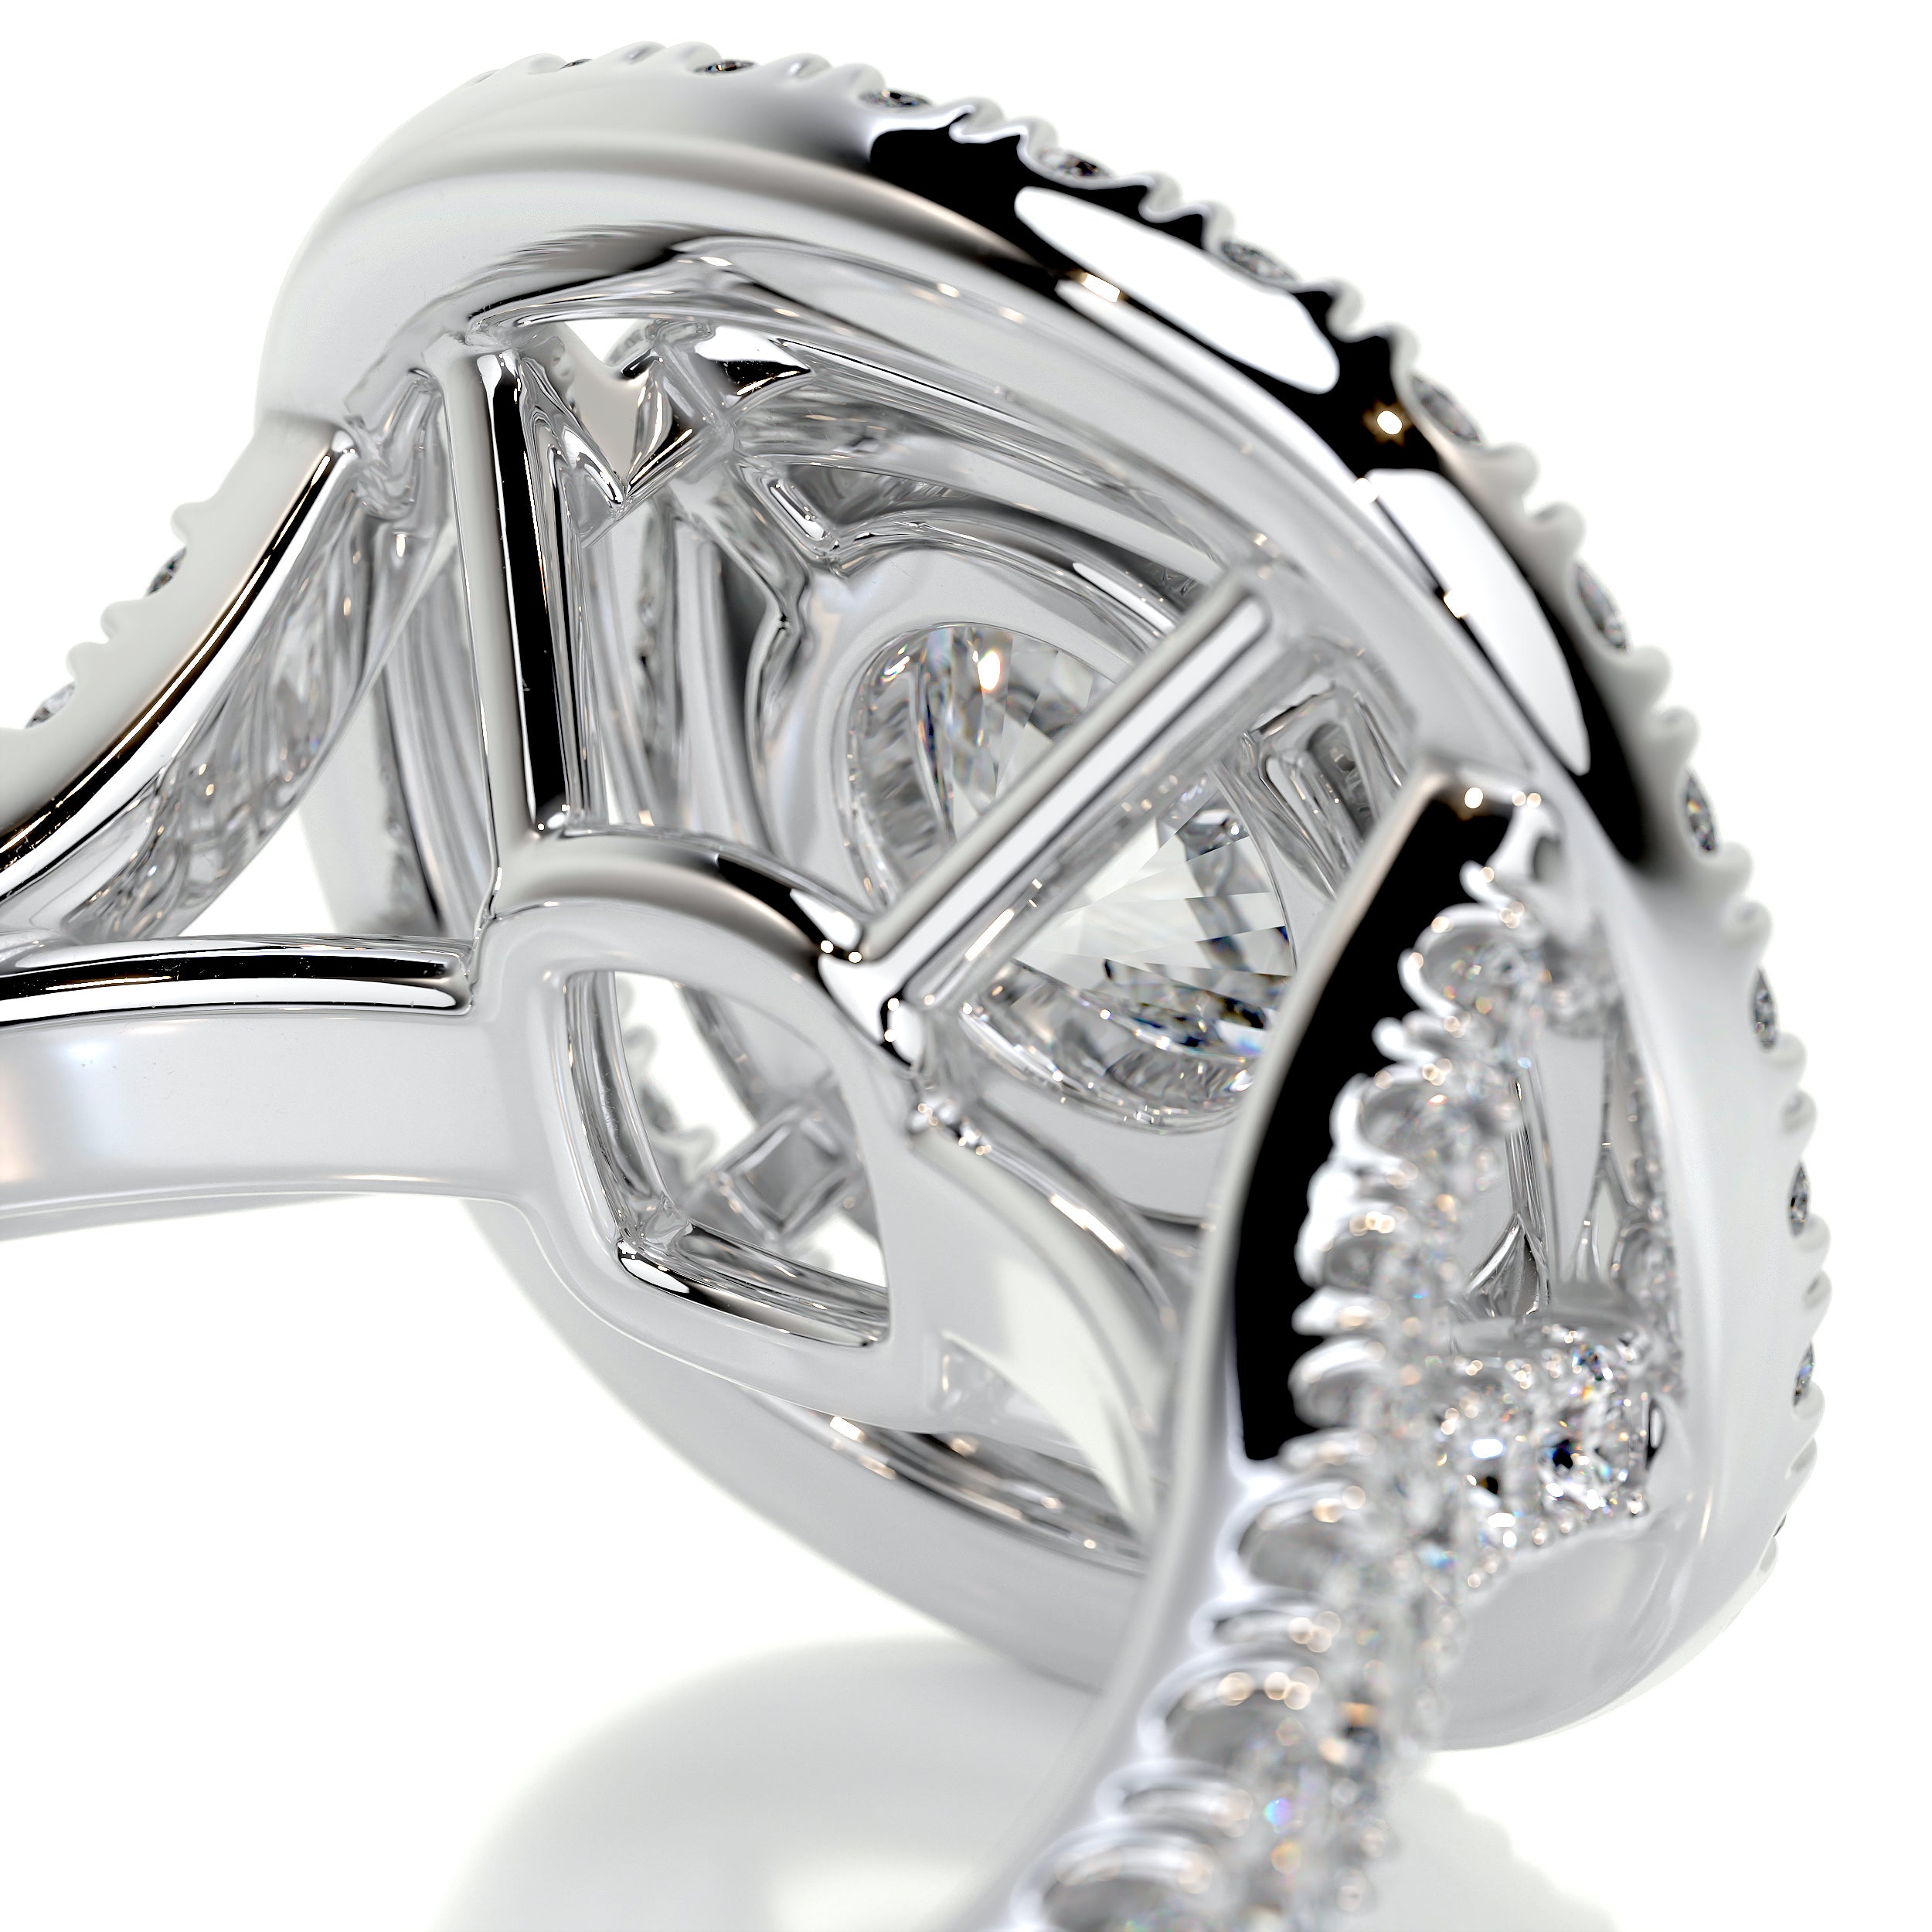 Natalie Diamond Engagement Ring   (2.2 Carat) -18K White Gold